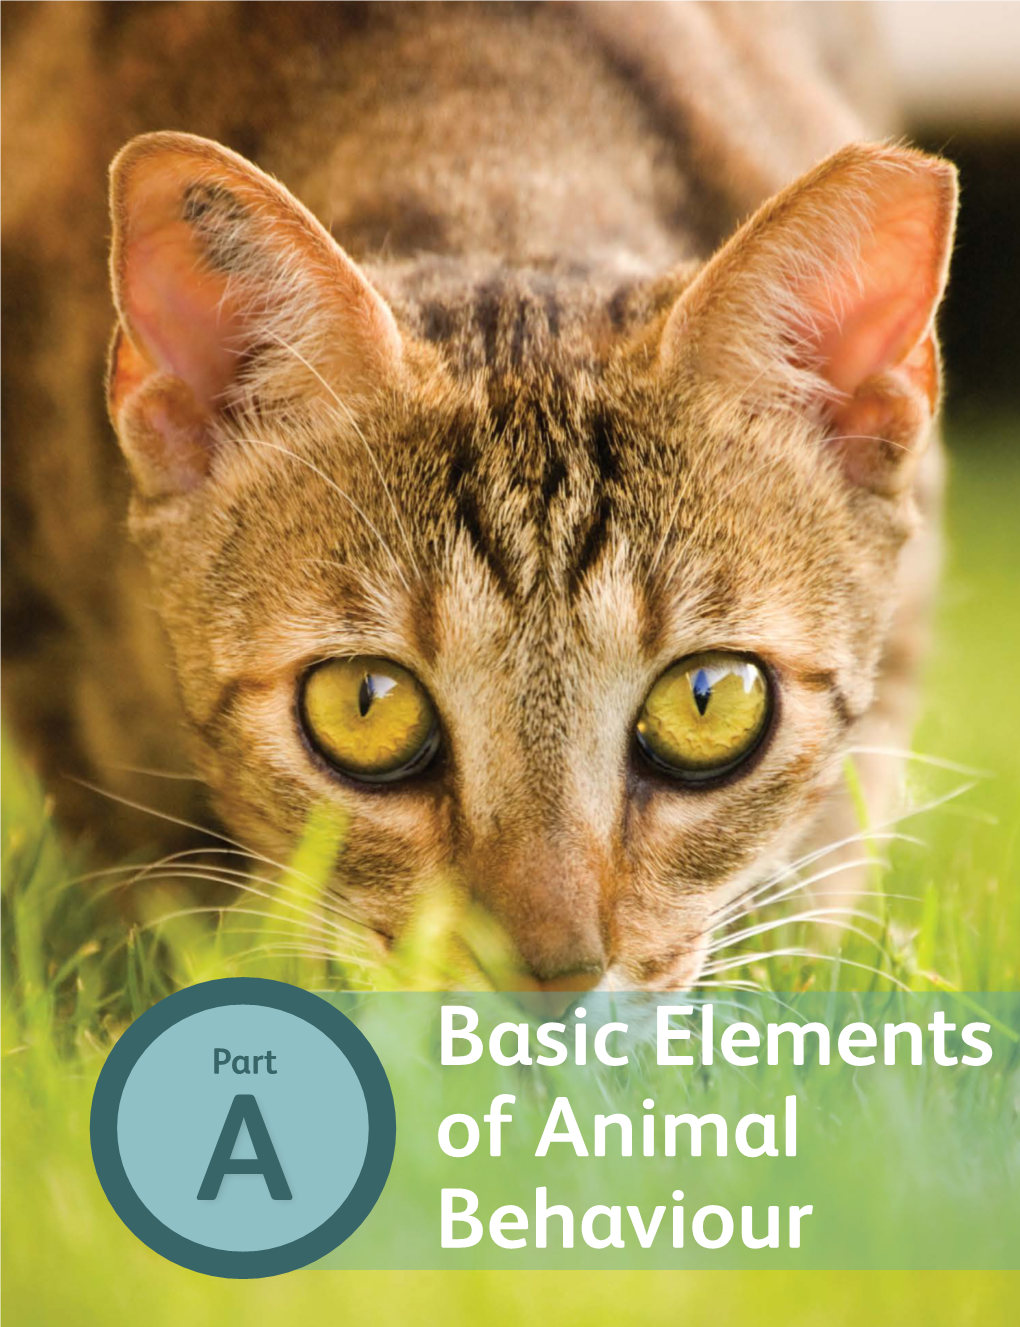 Basic Elements of Animal Behaviour